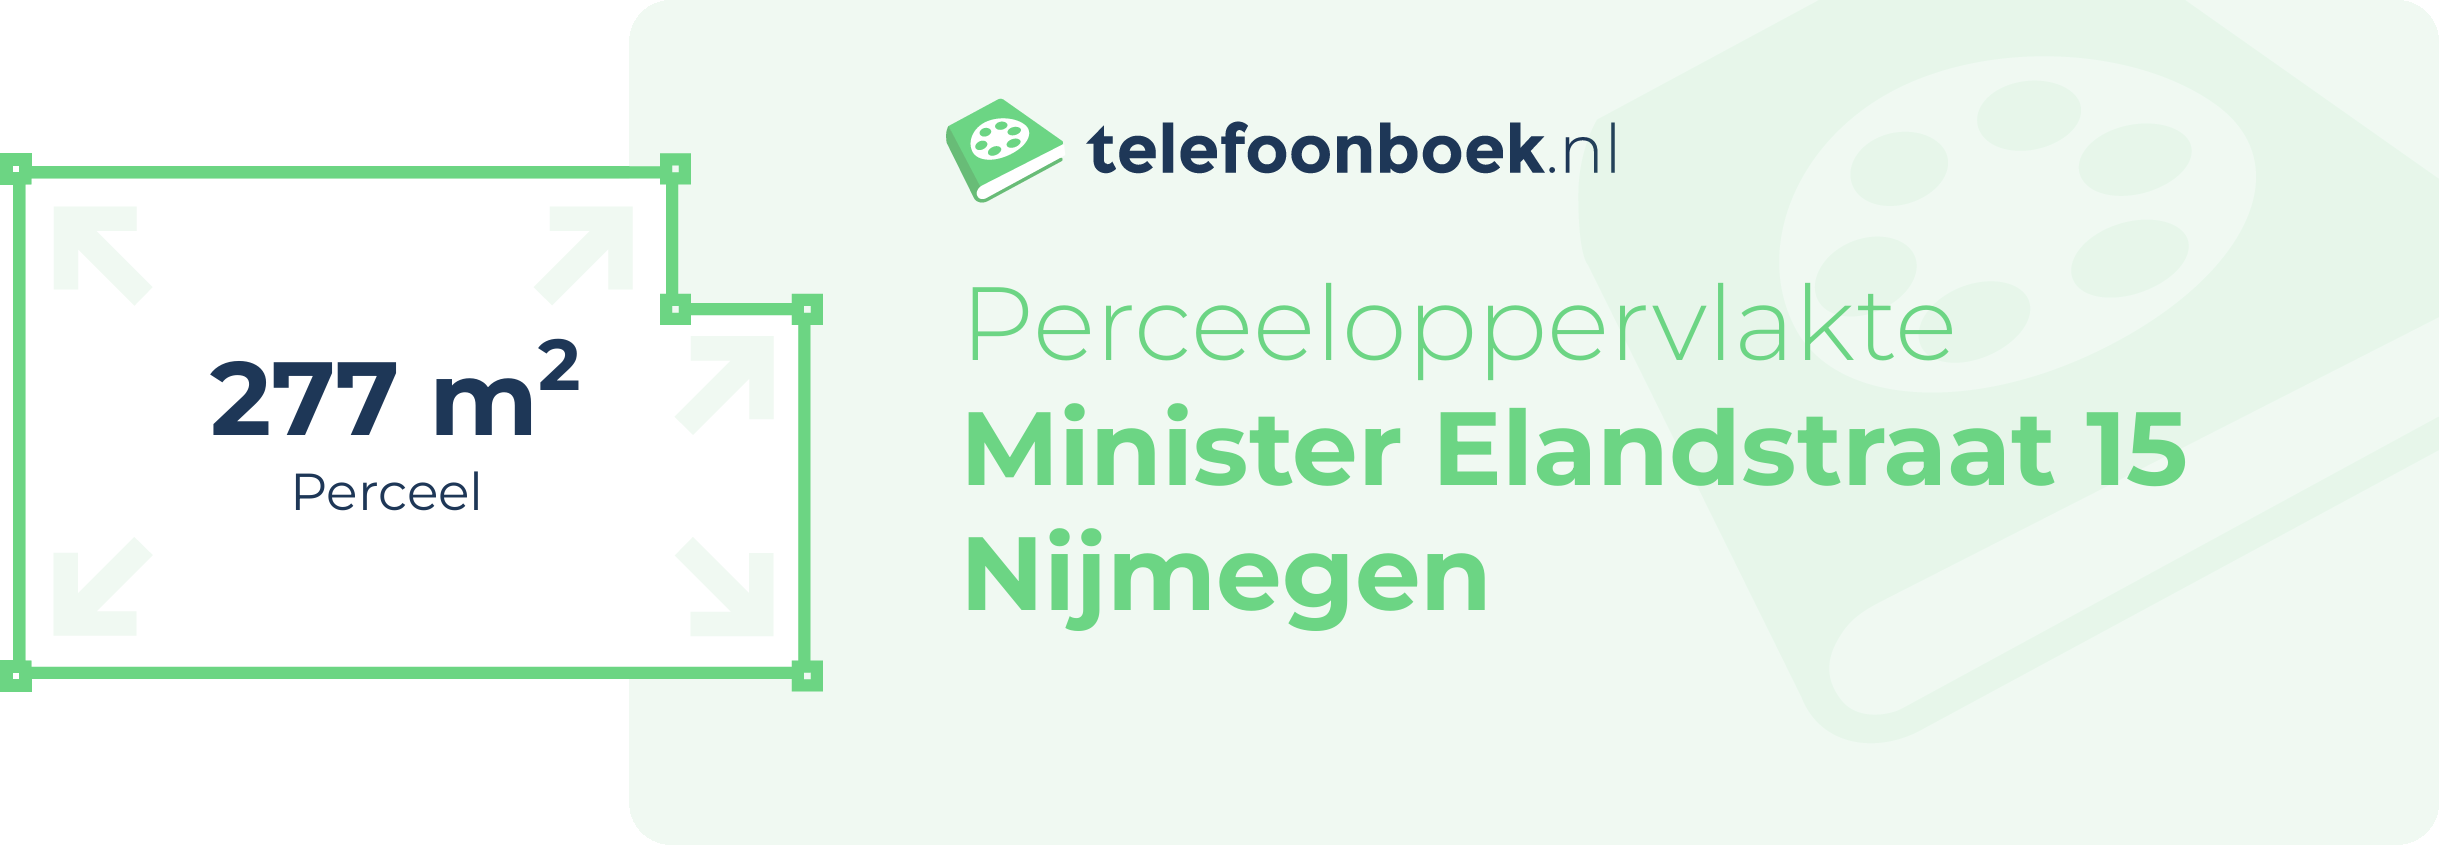 Perceeloppervlakte Minister Elandstraat 15 Nijmegen